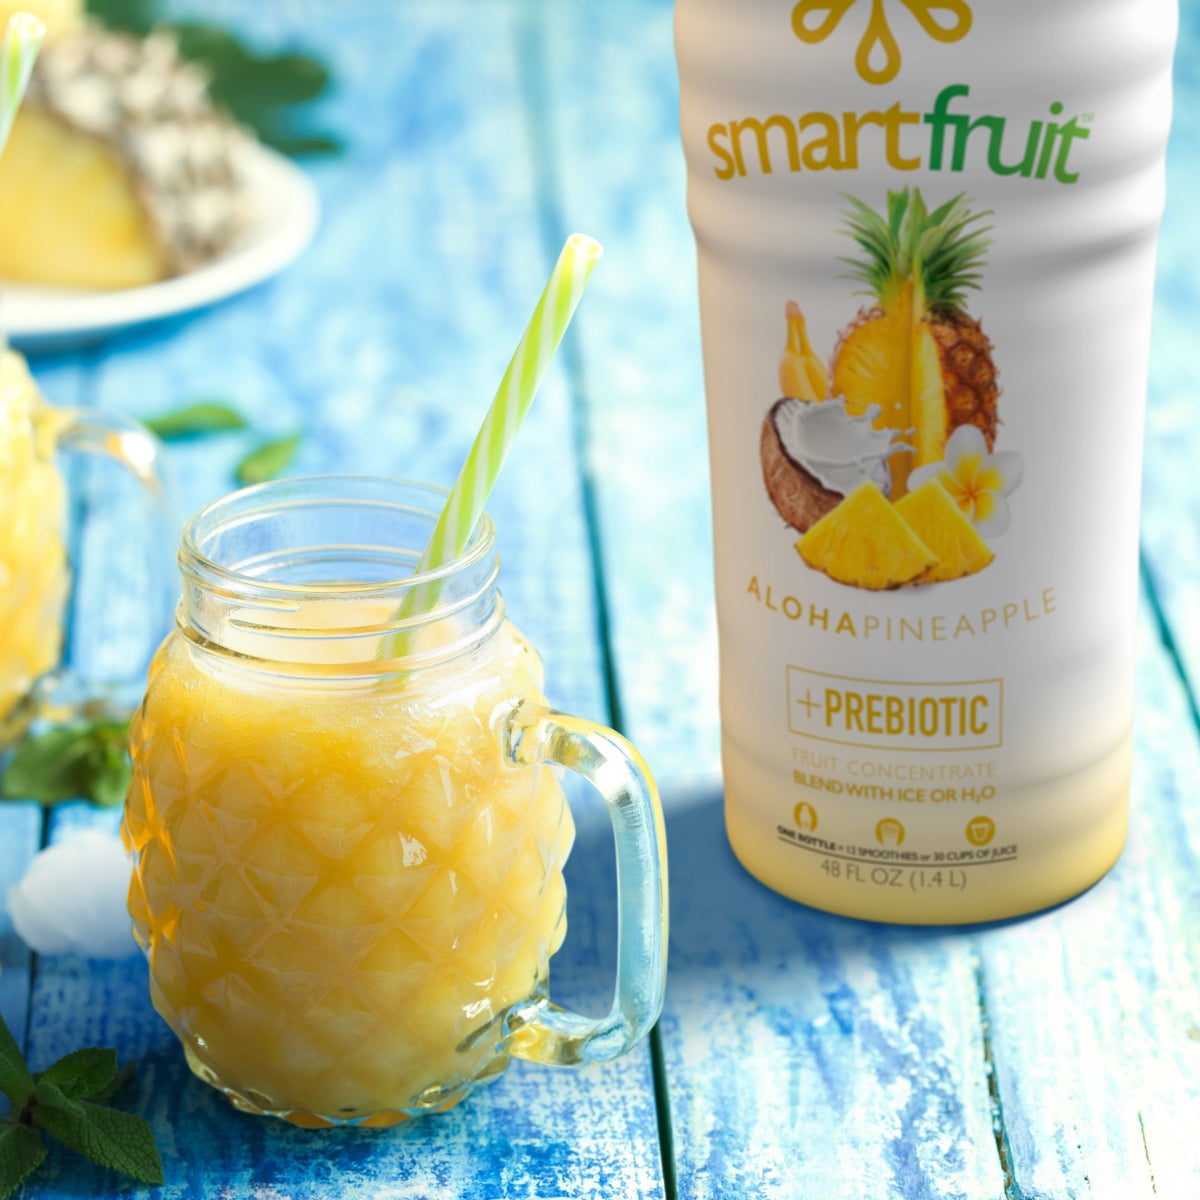 SmartFruit - 100% Real Fruit Puree: 48 fl. oz. Bottle: Aloha Pineapple